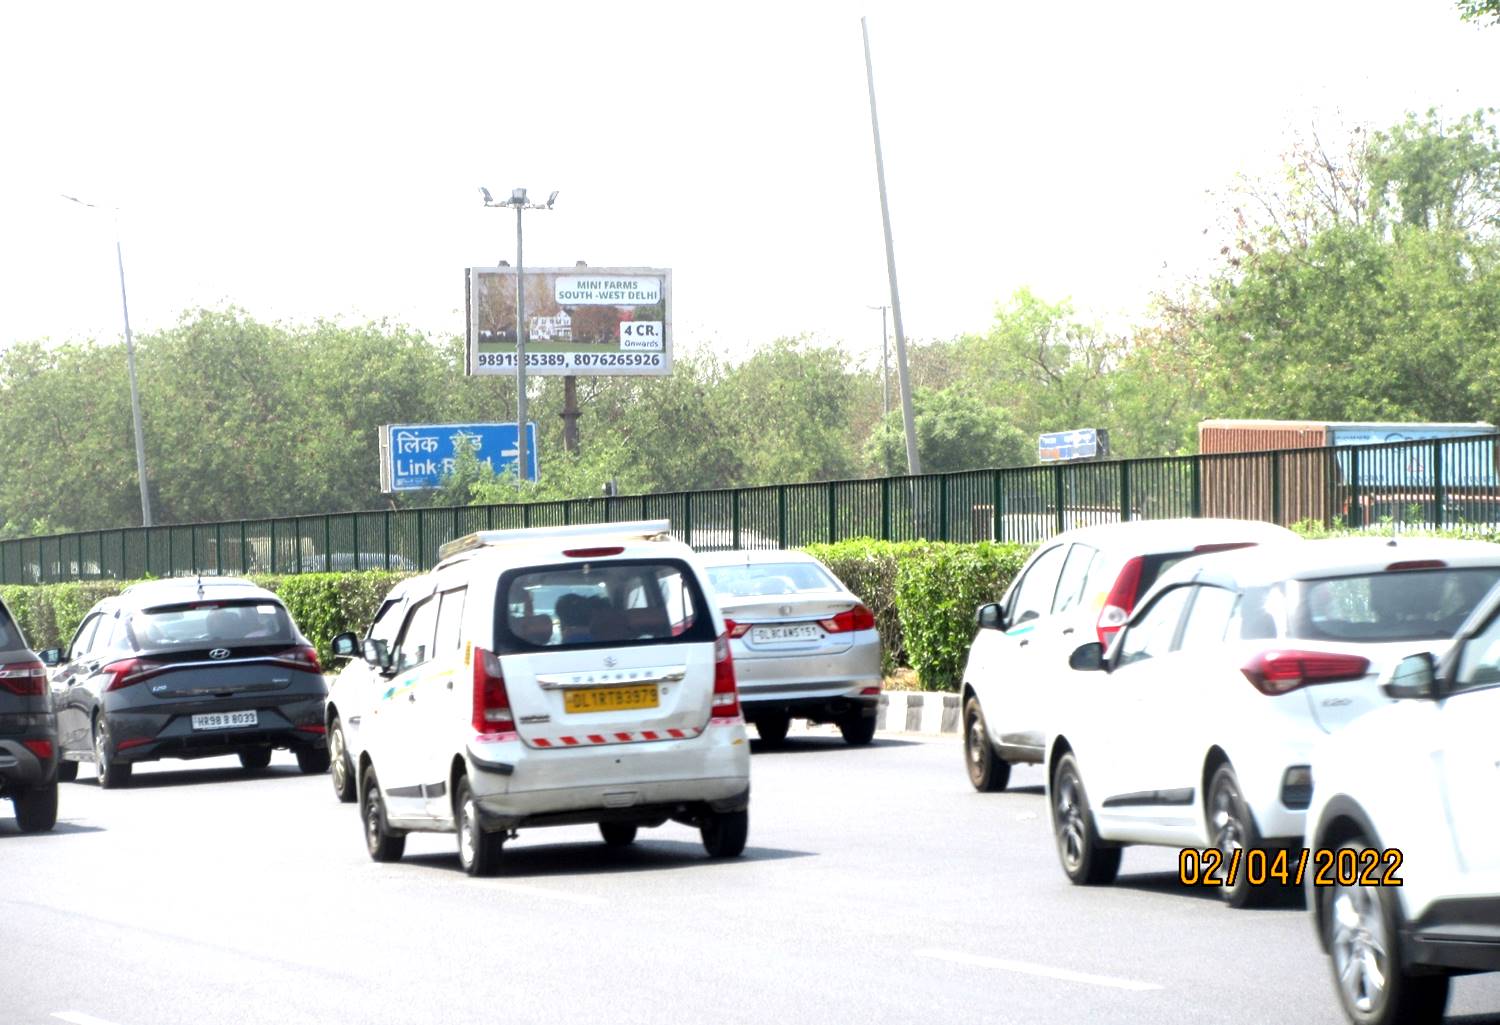 Unipole Nh-8 Aiport Road -2 South Delhi Delhi (NCR)